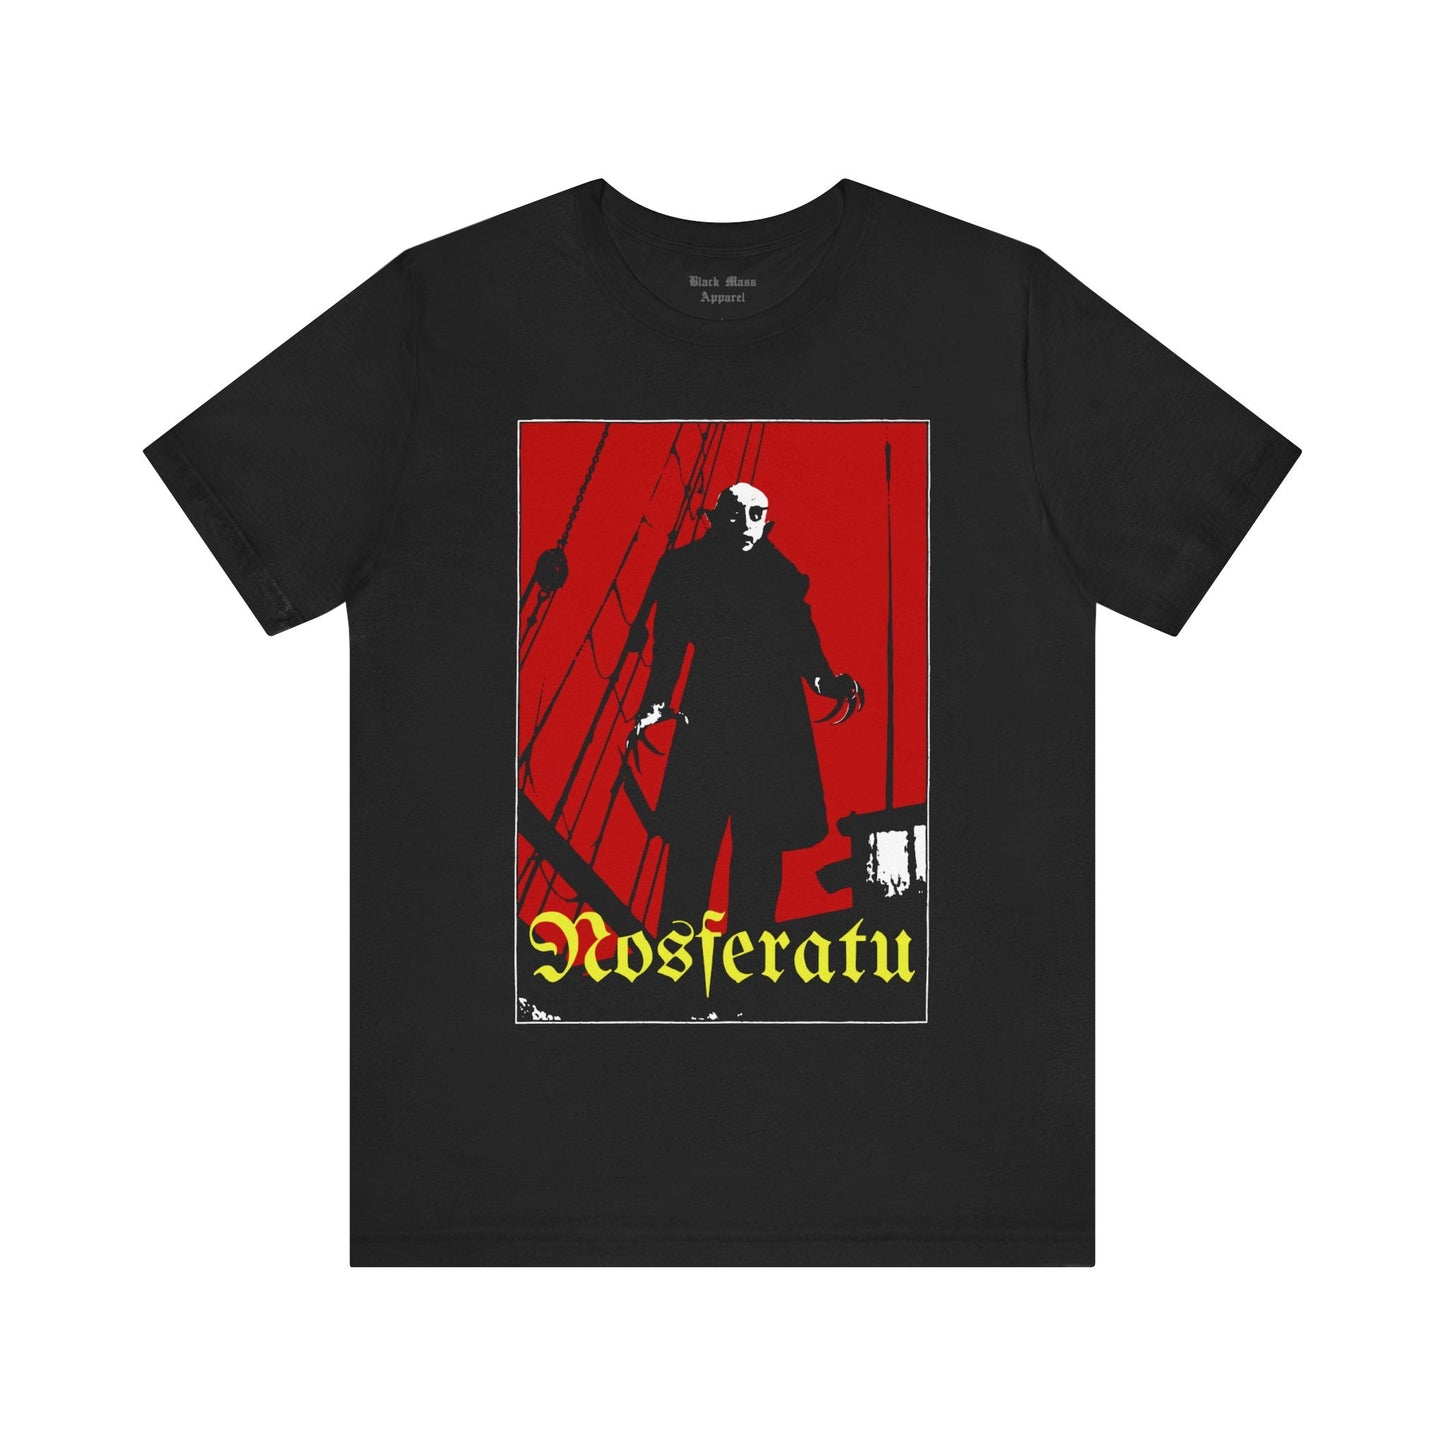 Nosferatu - Red - Black Mass Apparel - T-Shirt